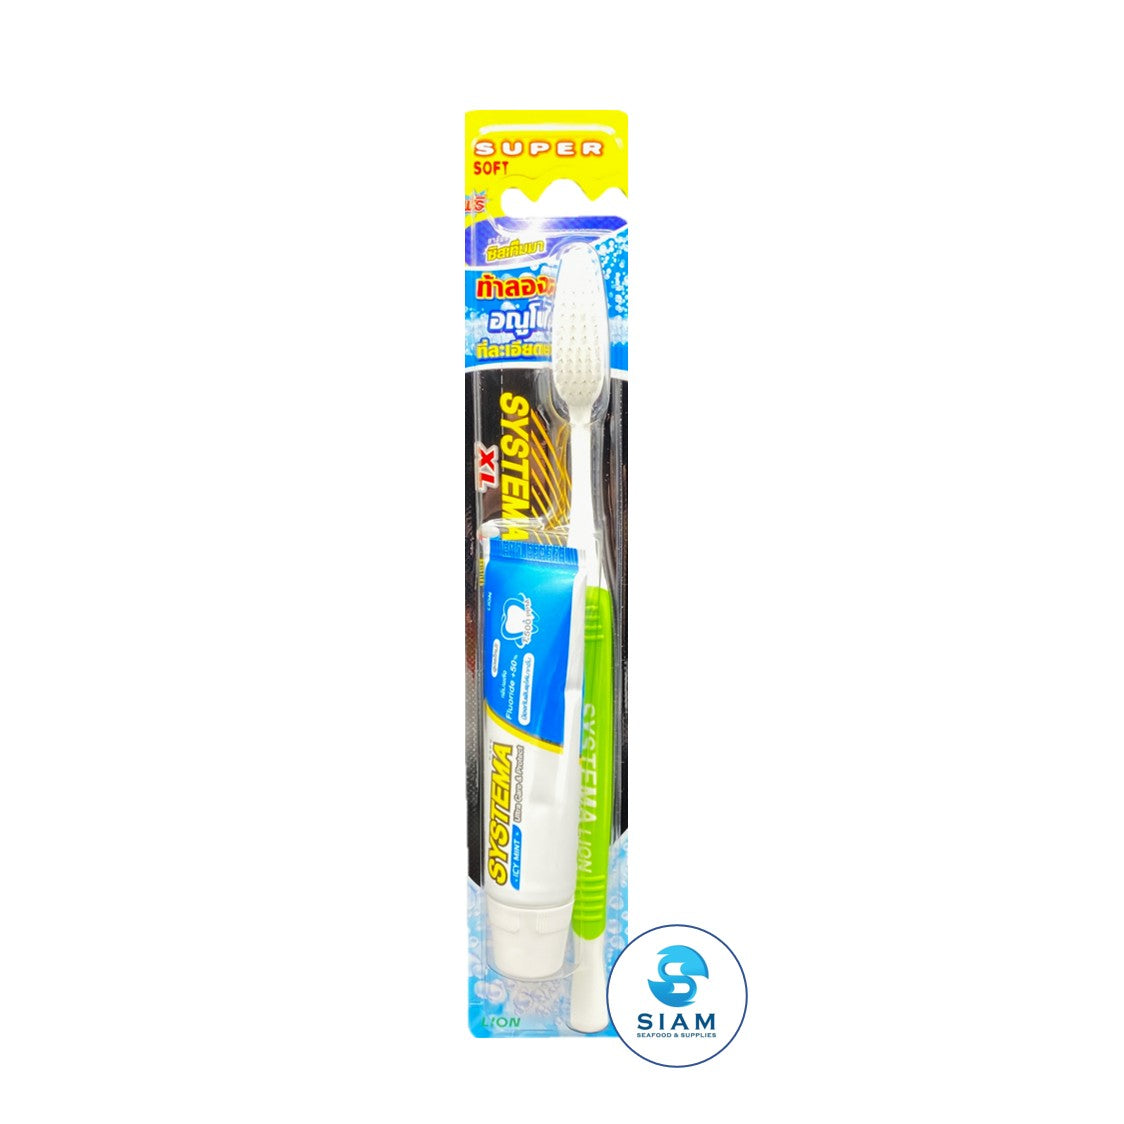 Toothbrush XL, Super Soft - Systema (1.7 oz-vol wt 2.1 oz) แปรงสีฟันซิสเท็มมา หัวแปรงขนาดใหญ่ แบบนุ่มพิเศษ shippable Systema